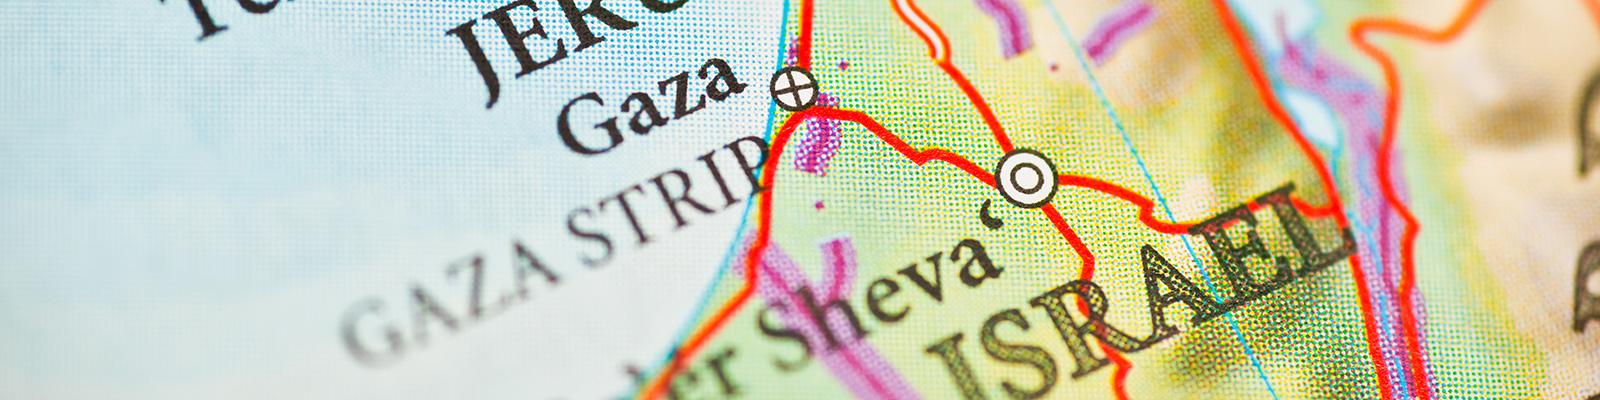 map of israel and gaza